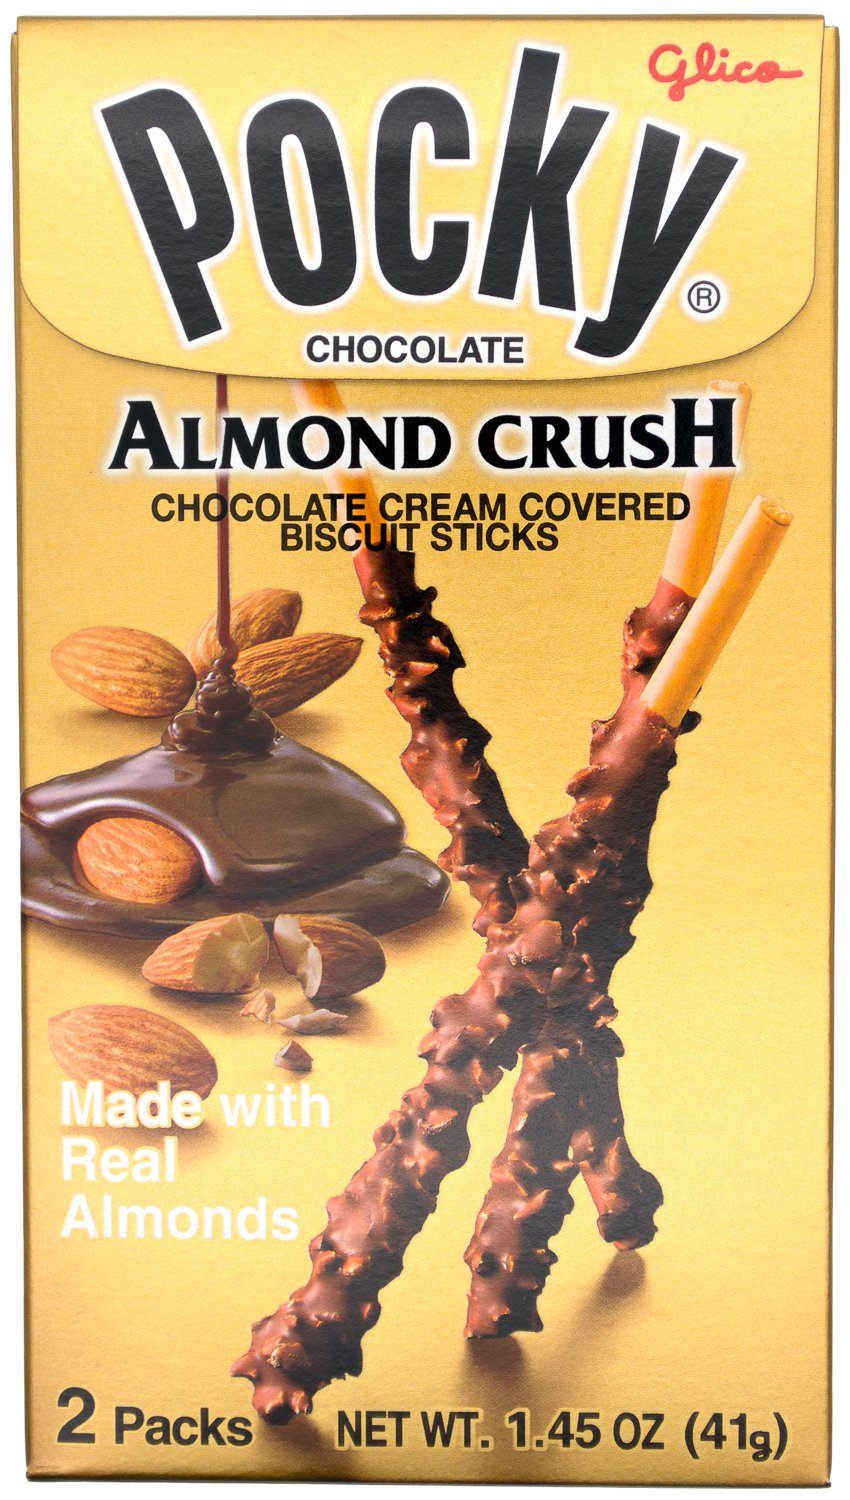 Pocky Cream Covered Biscuit Sticks Glico Almond Crush 1.45 Ounce 